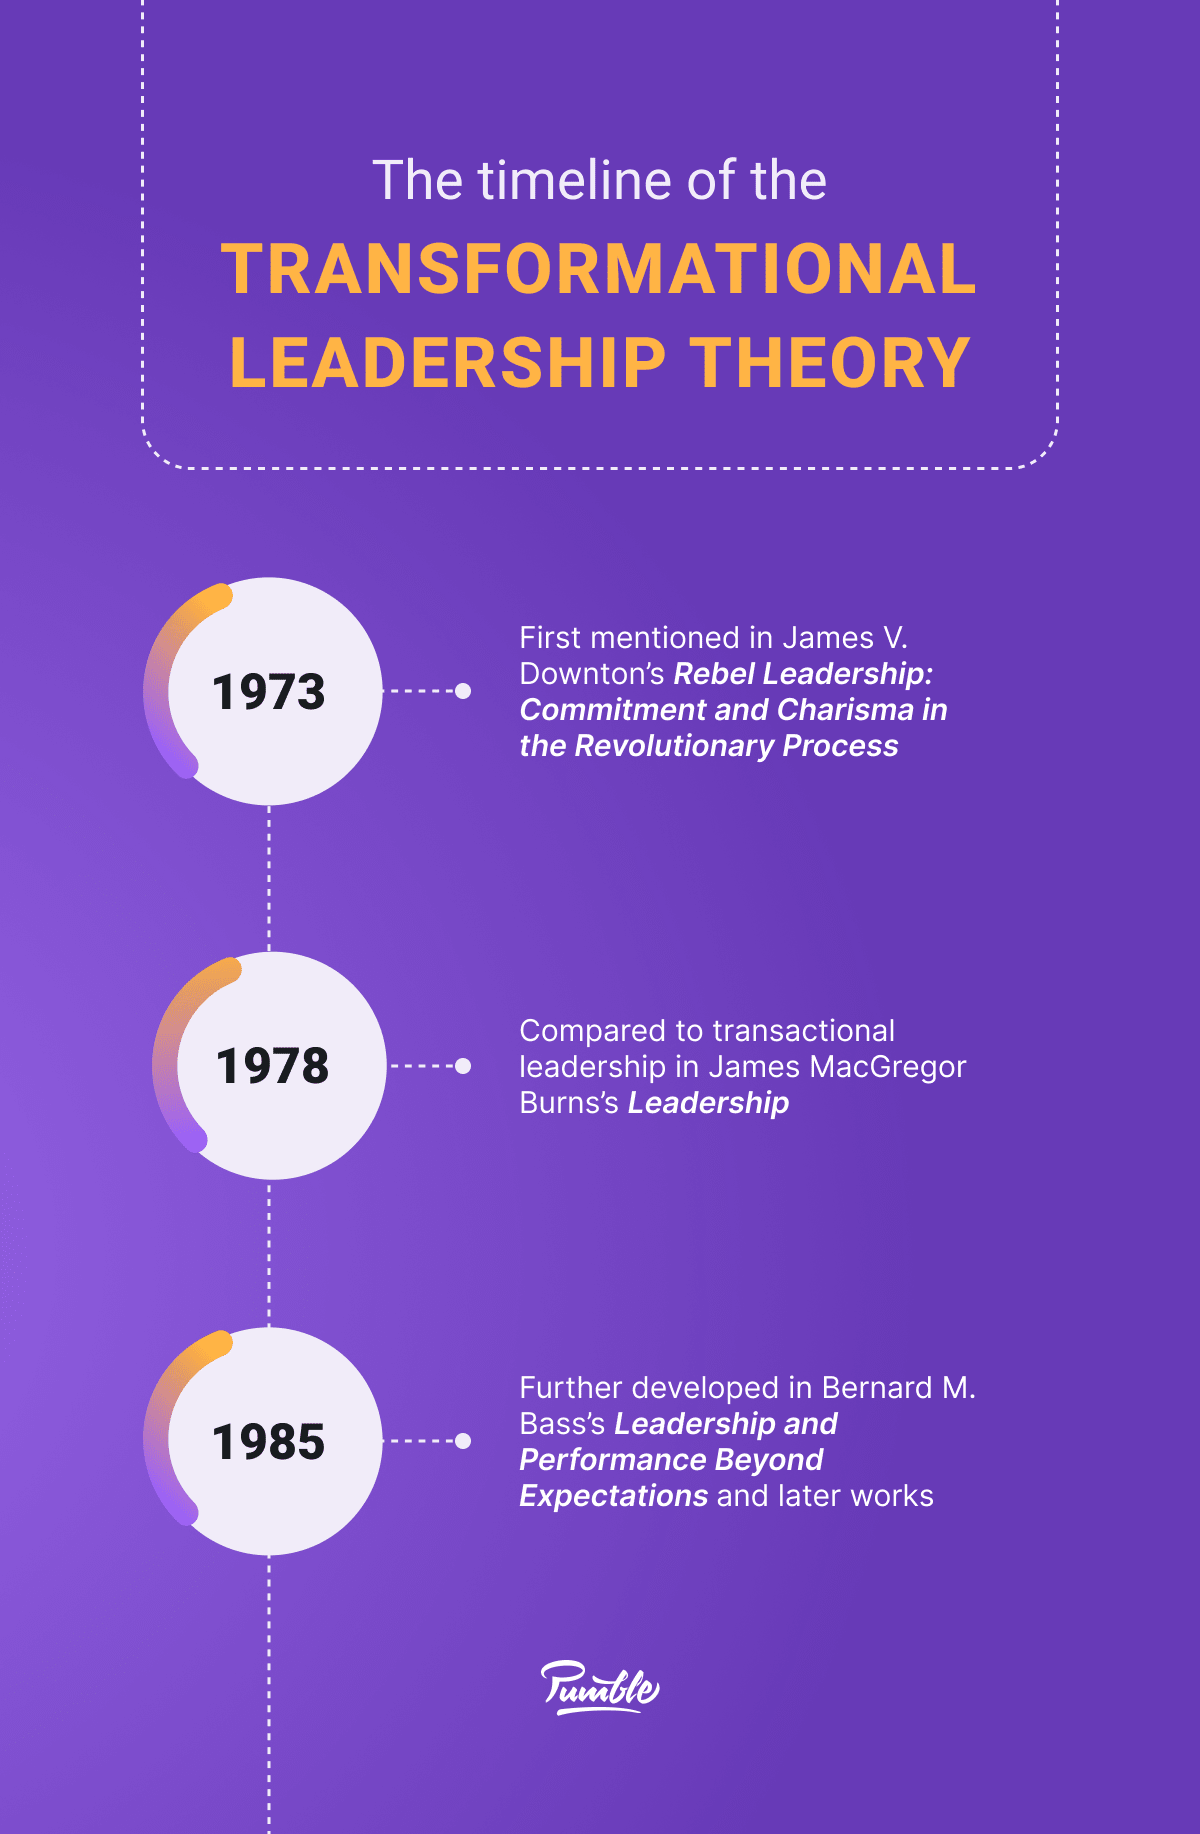 Transformational leadership theory timeline